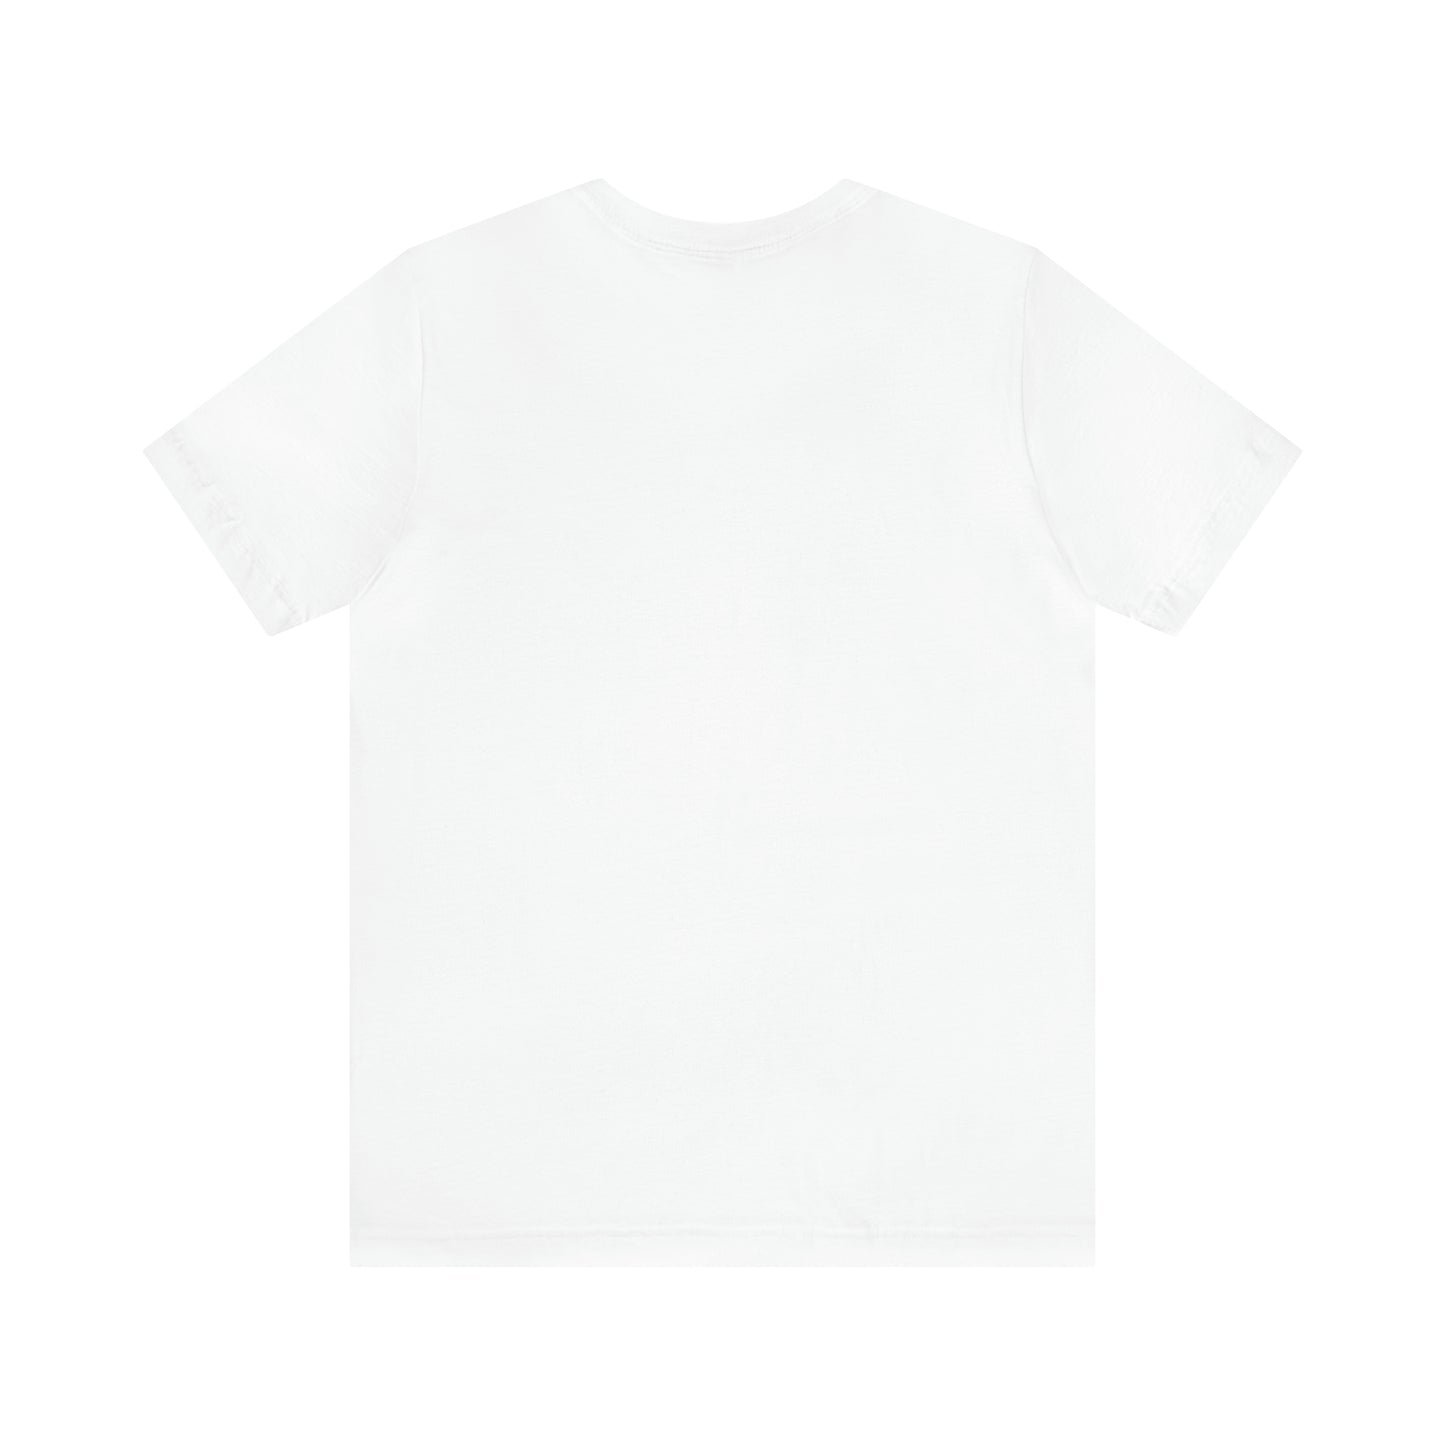 ORTA JUZ Unisex T-Shirt